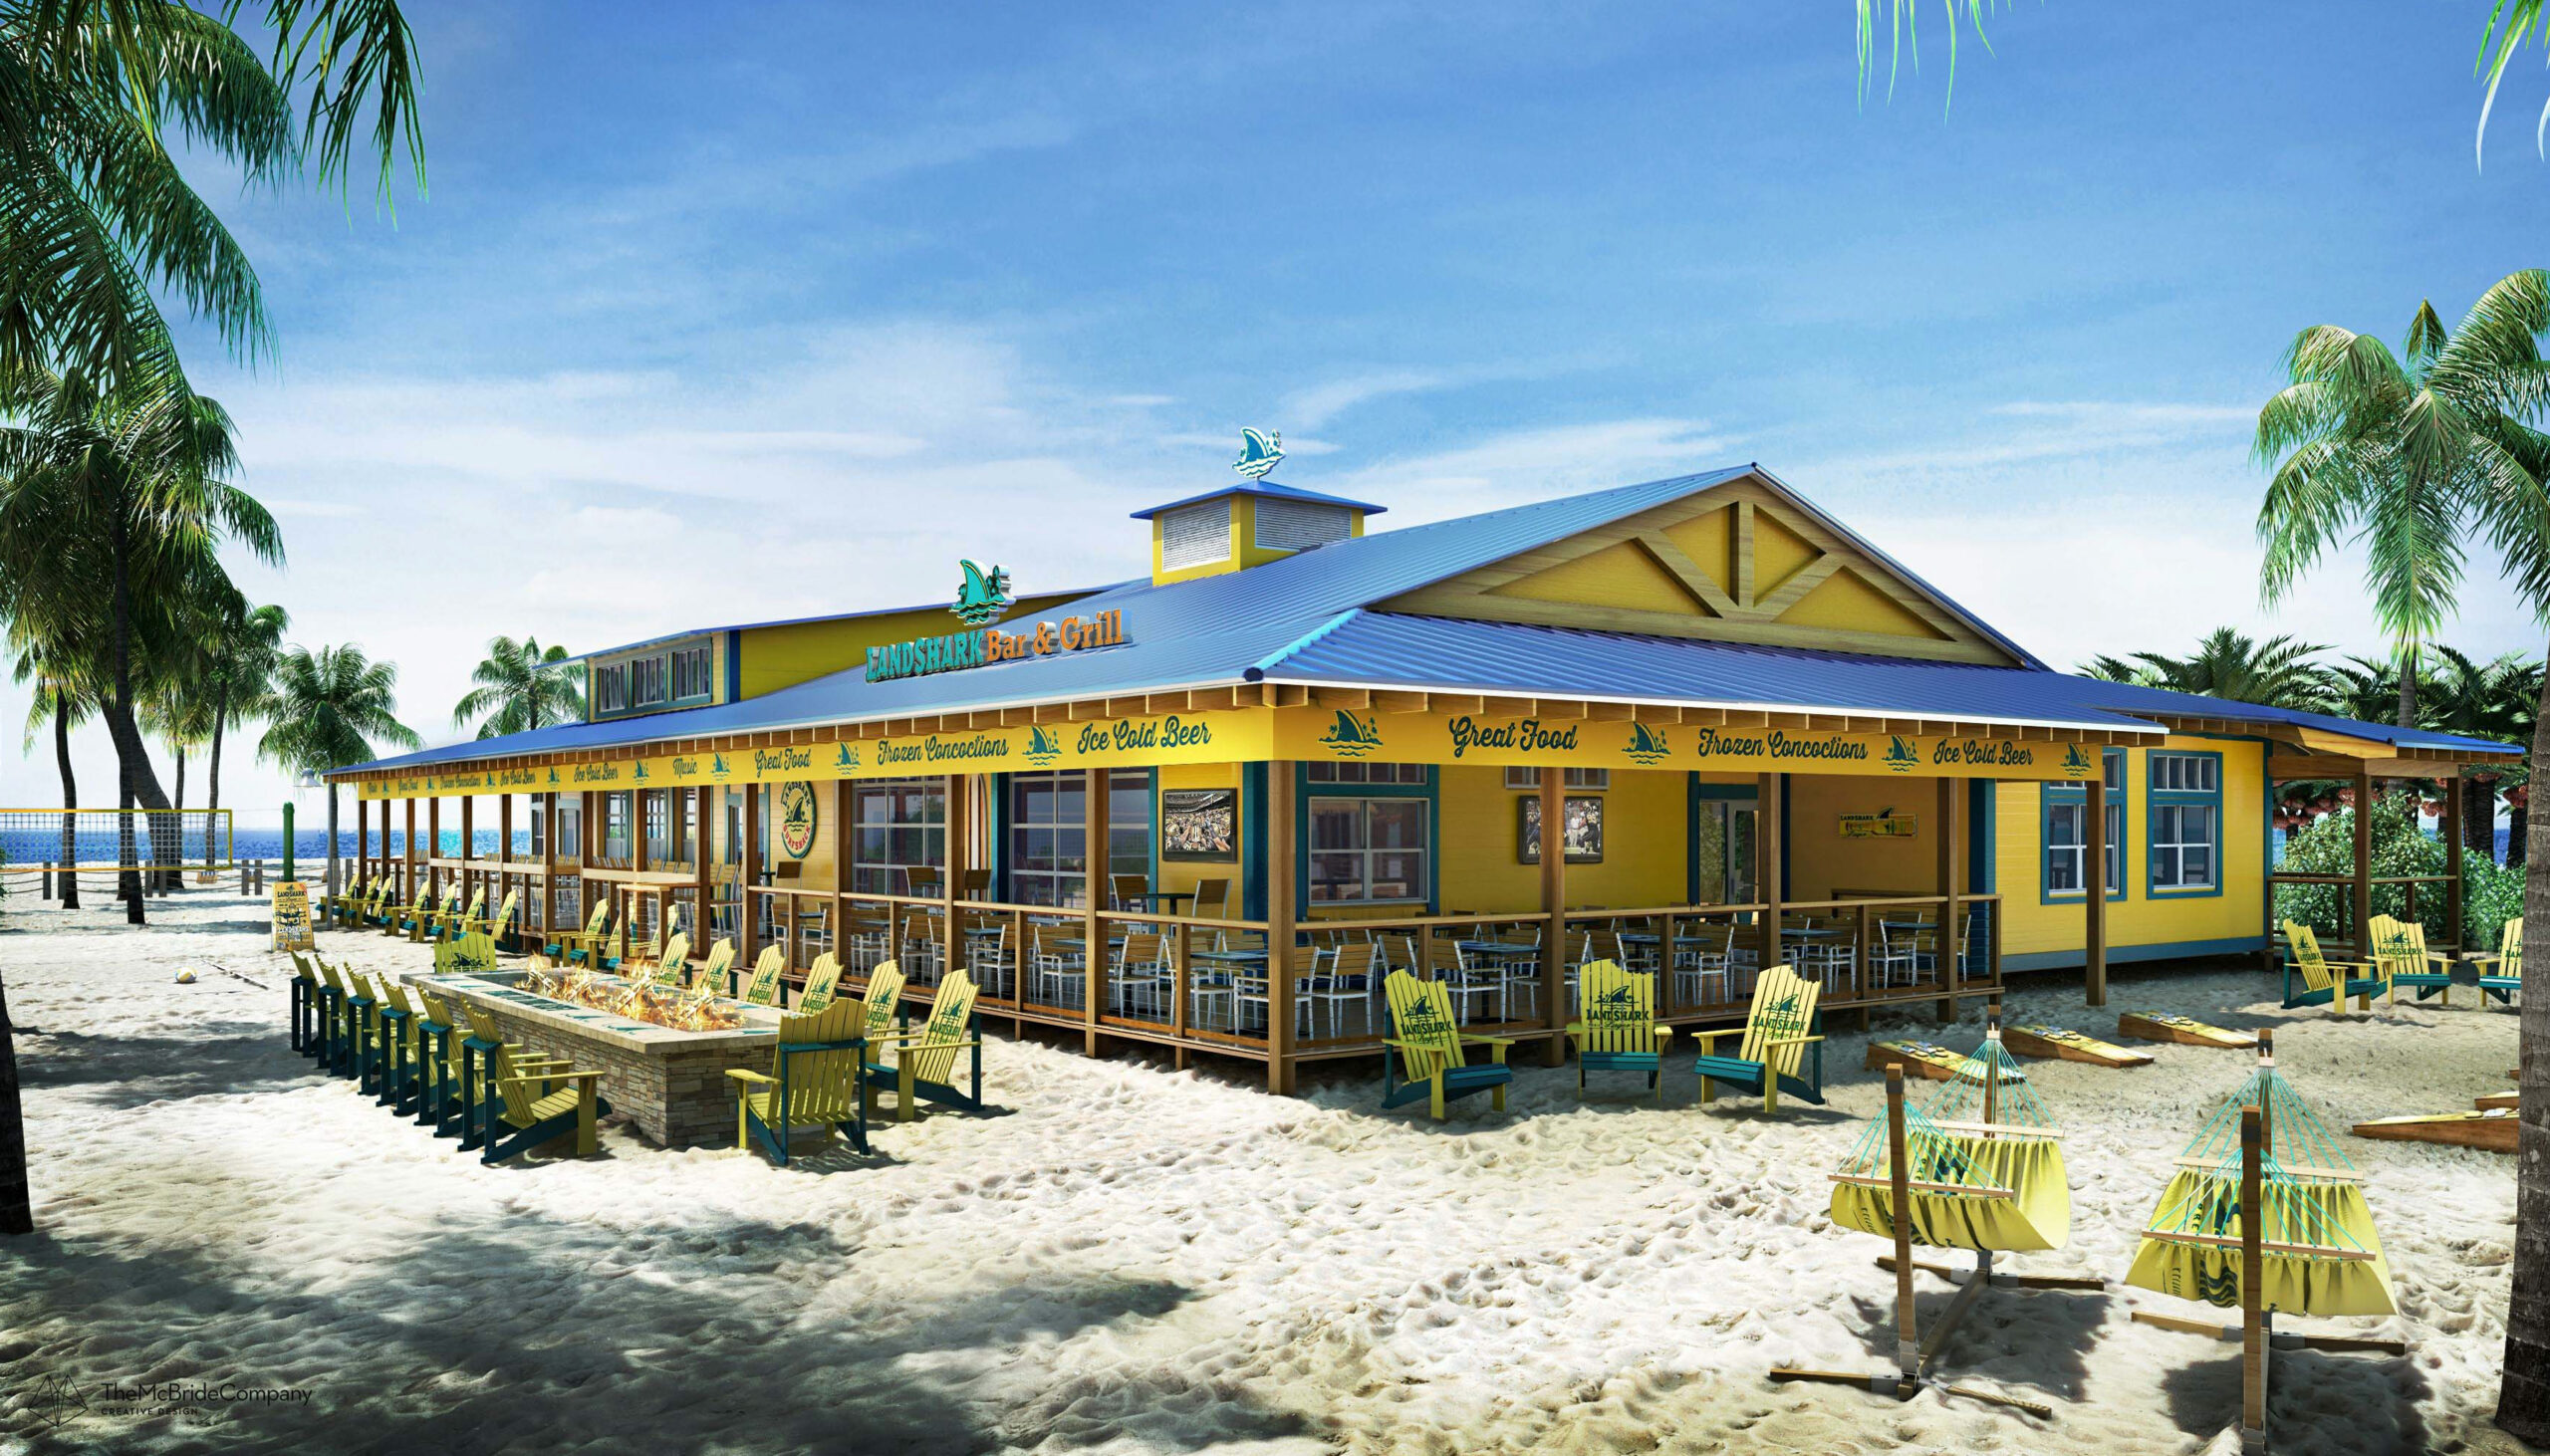 LandShark Bar & Grill Daytona Beach ahora está contratando